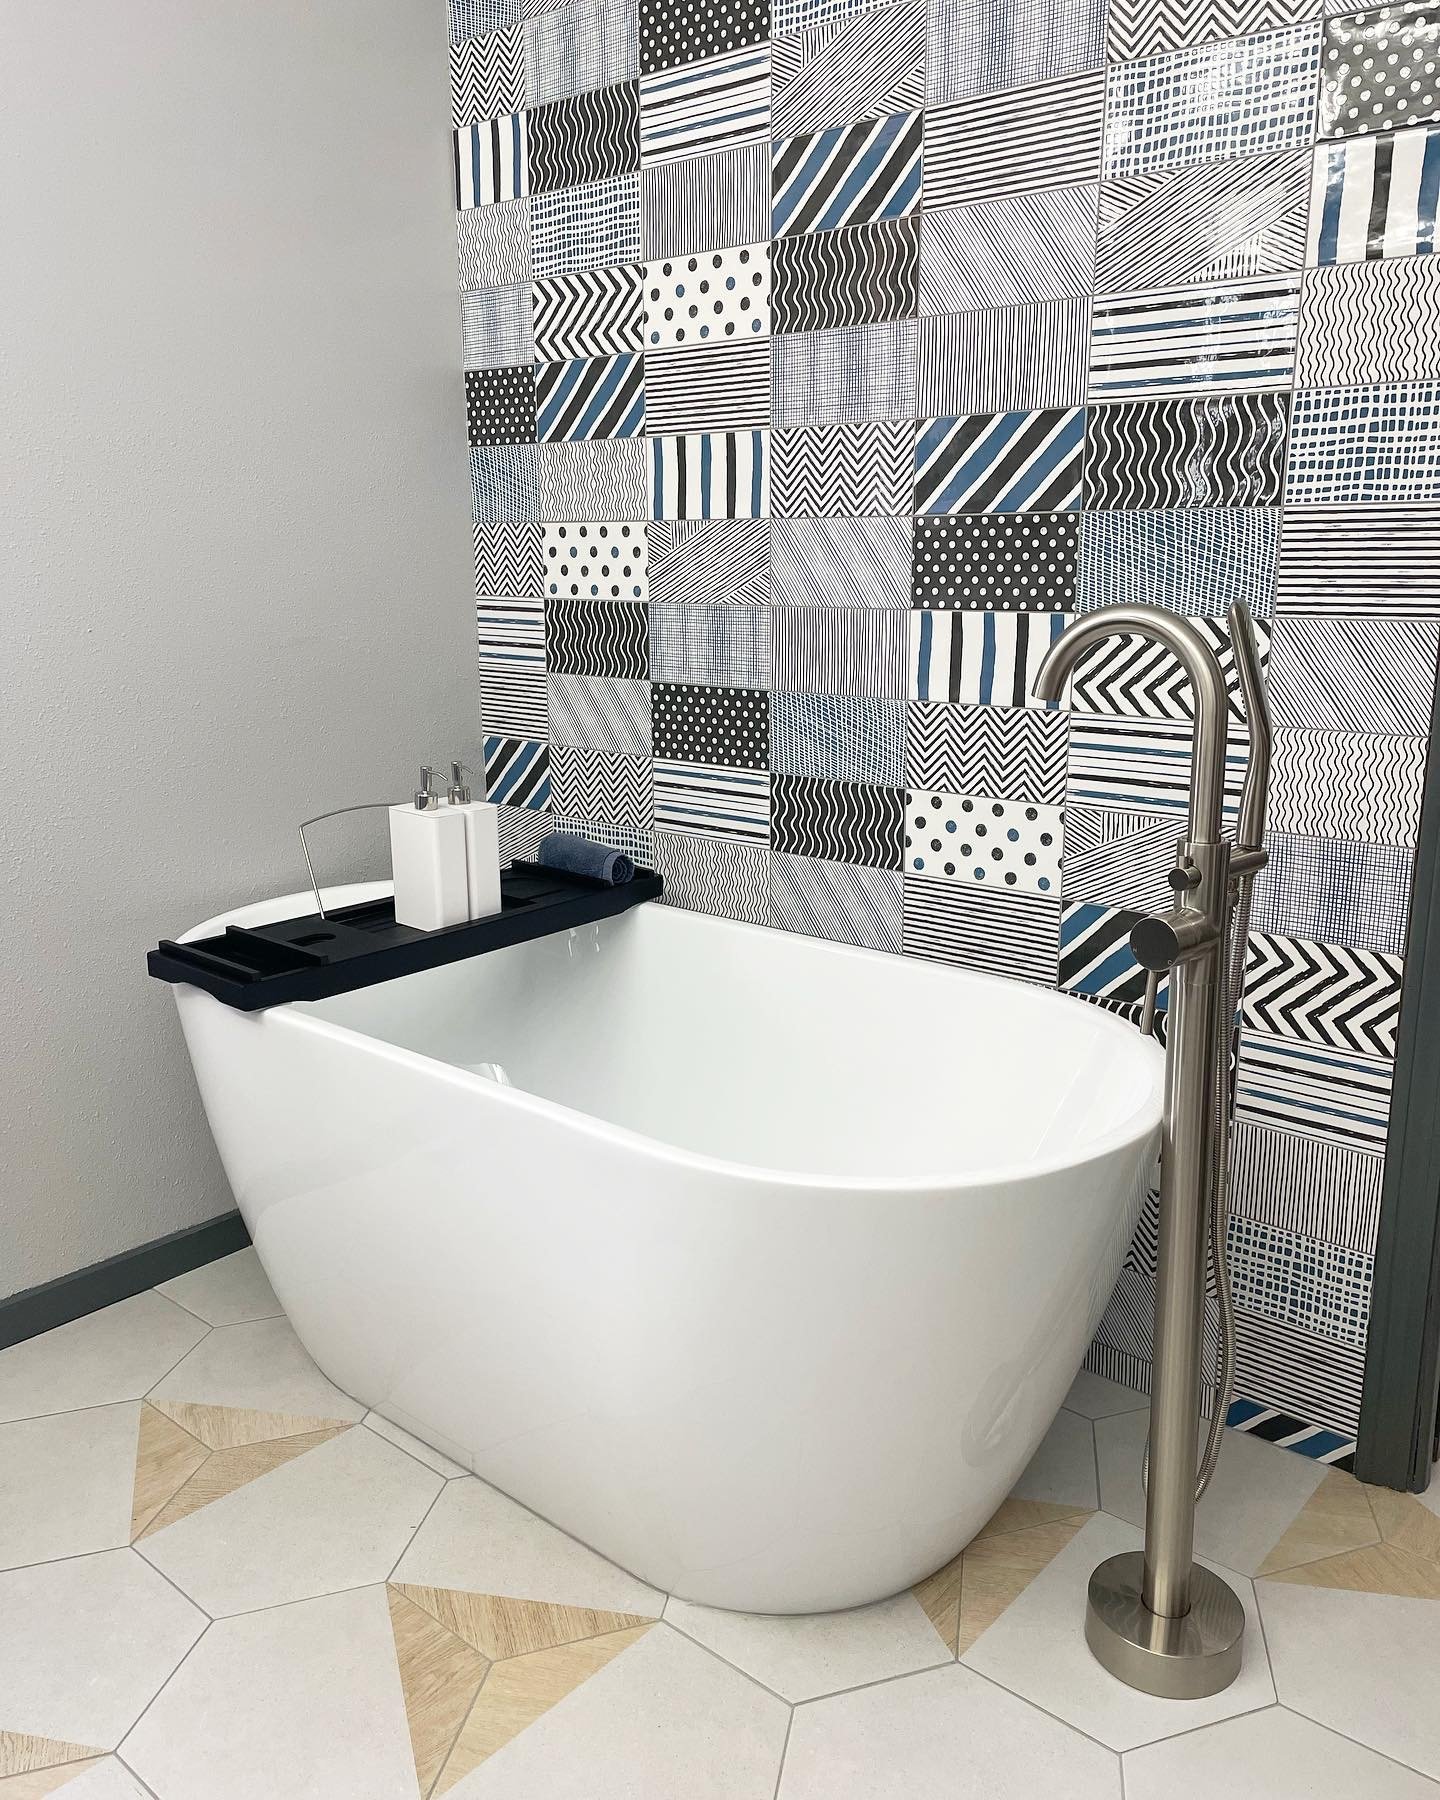 Large soaking tub next to funky geometric tile wall